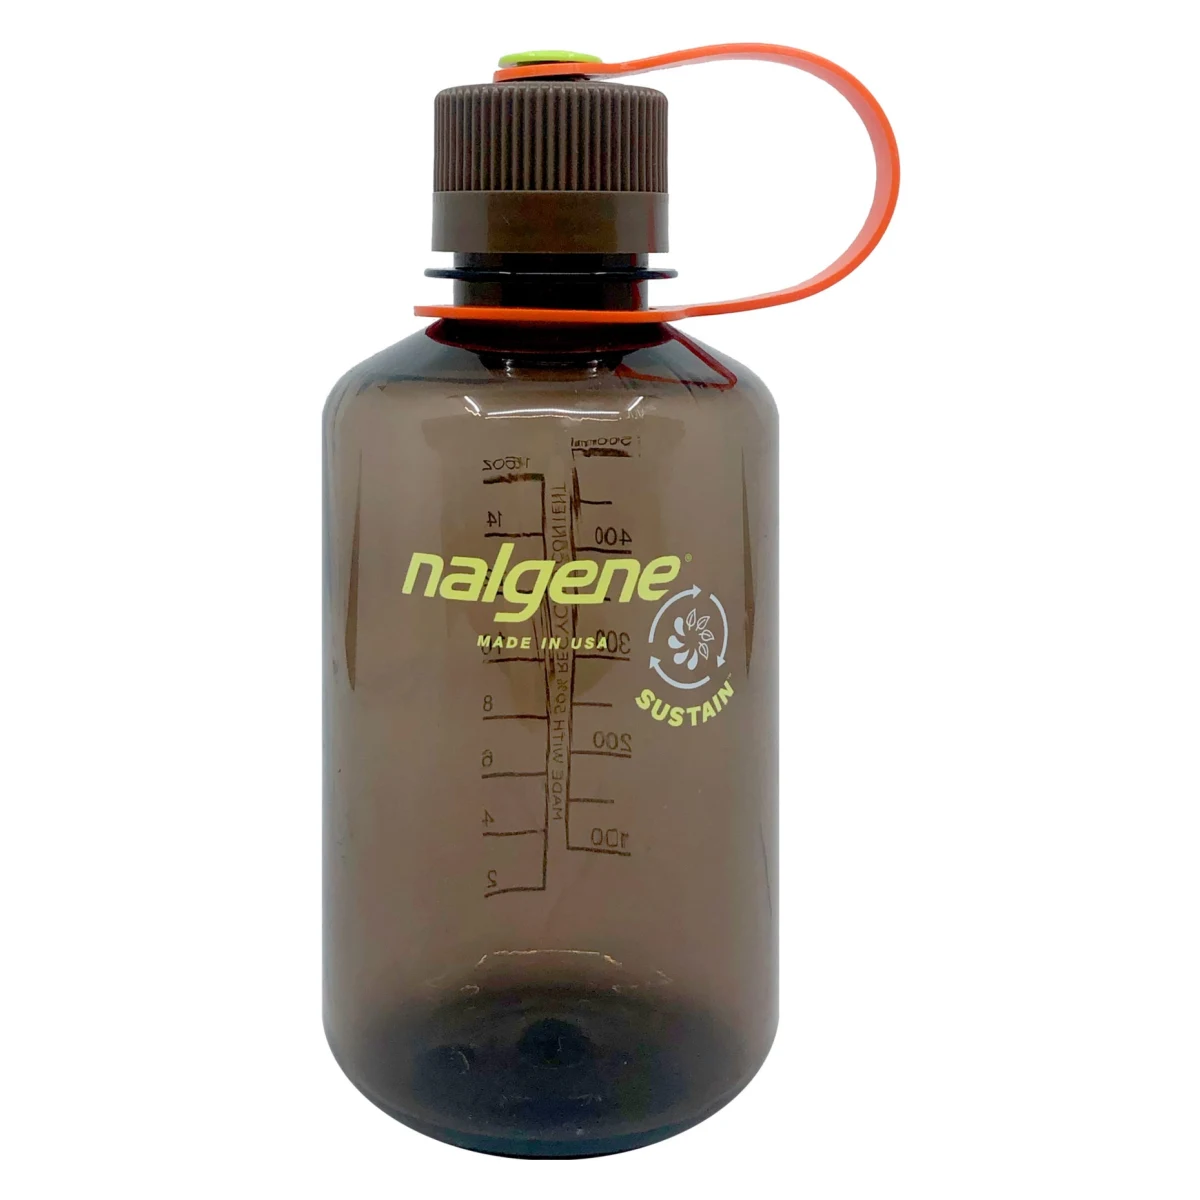 Nalgene 454 ml Narrow Mouth Sustain Water Bottle